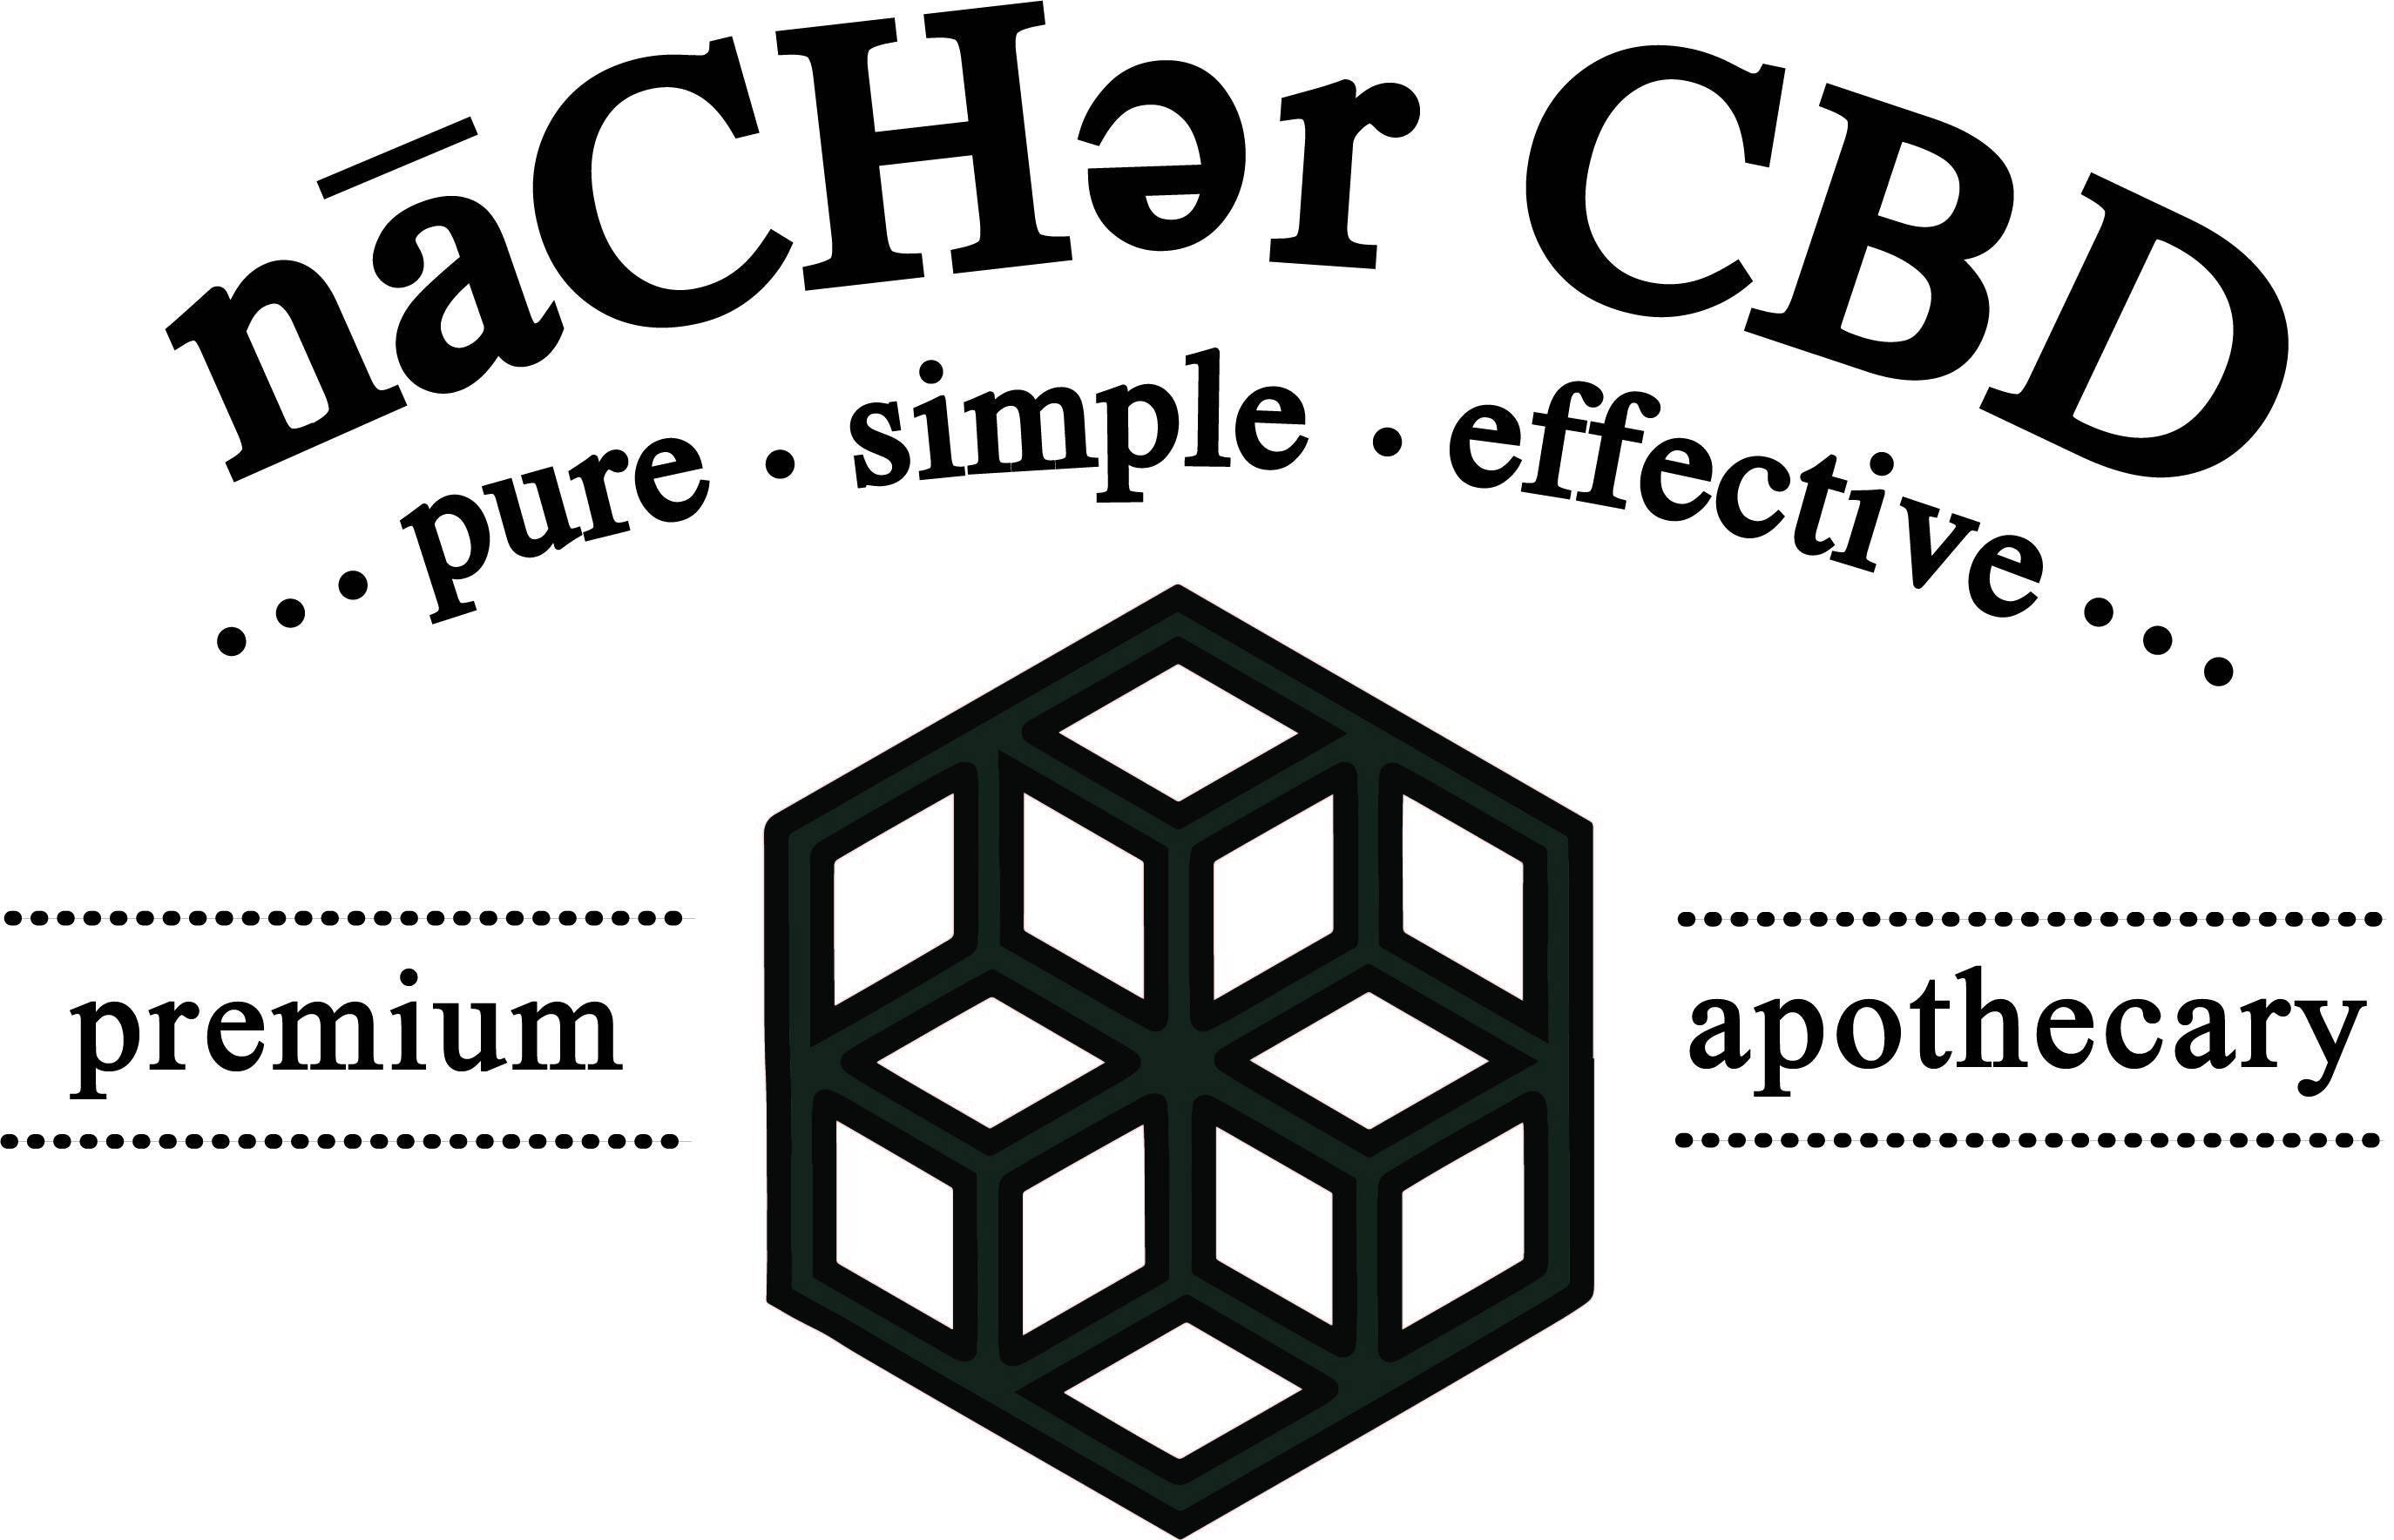 nacher cbd authentic  cannabinoid  solutions.